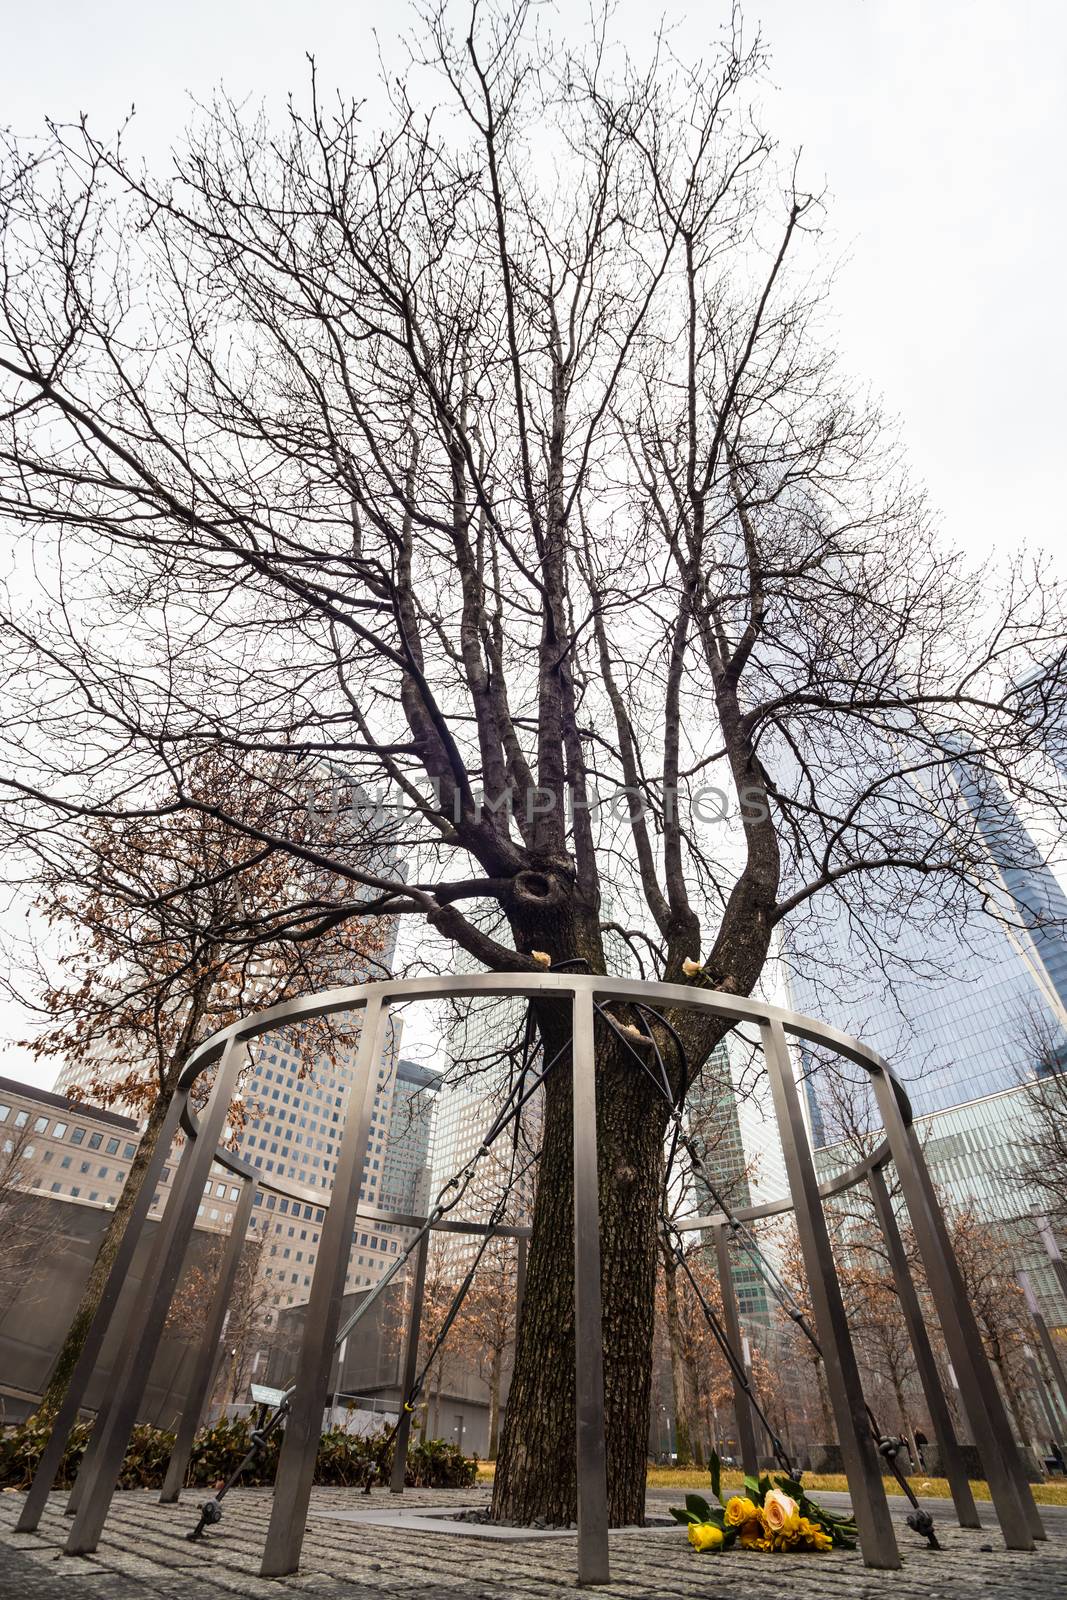 Survivor Tree That Withstood 9.11. Attacks on WTC Memorial Plaza, National September 11 Memorial, Manhattan, New York, United States of America.